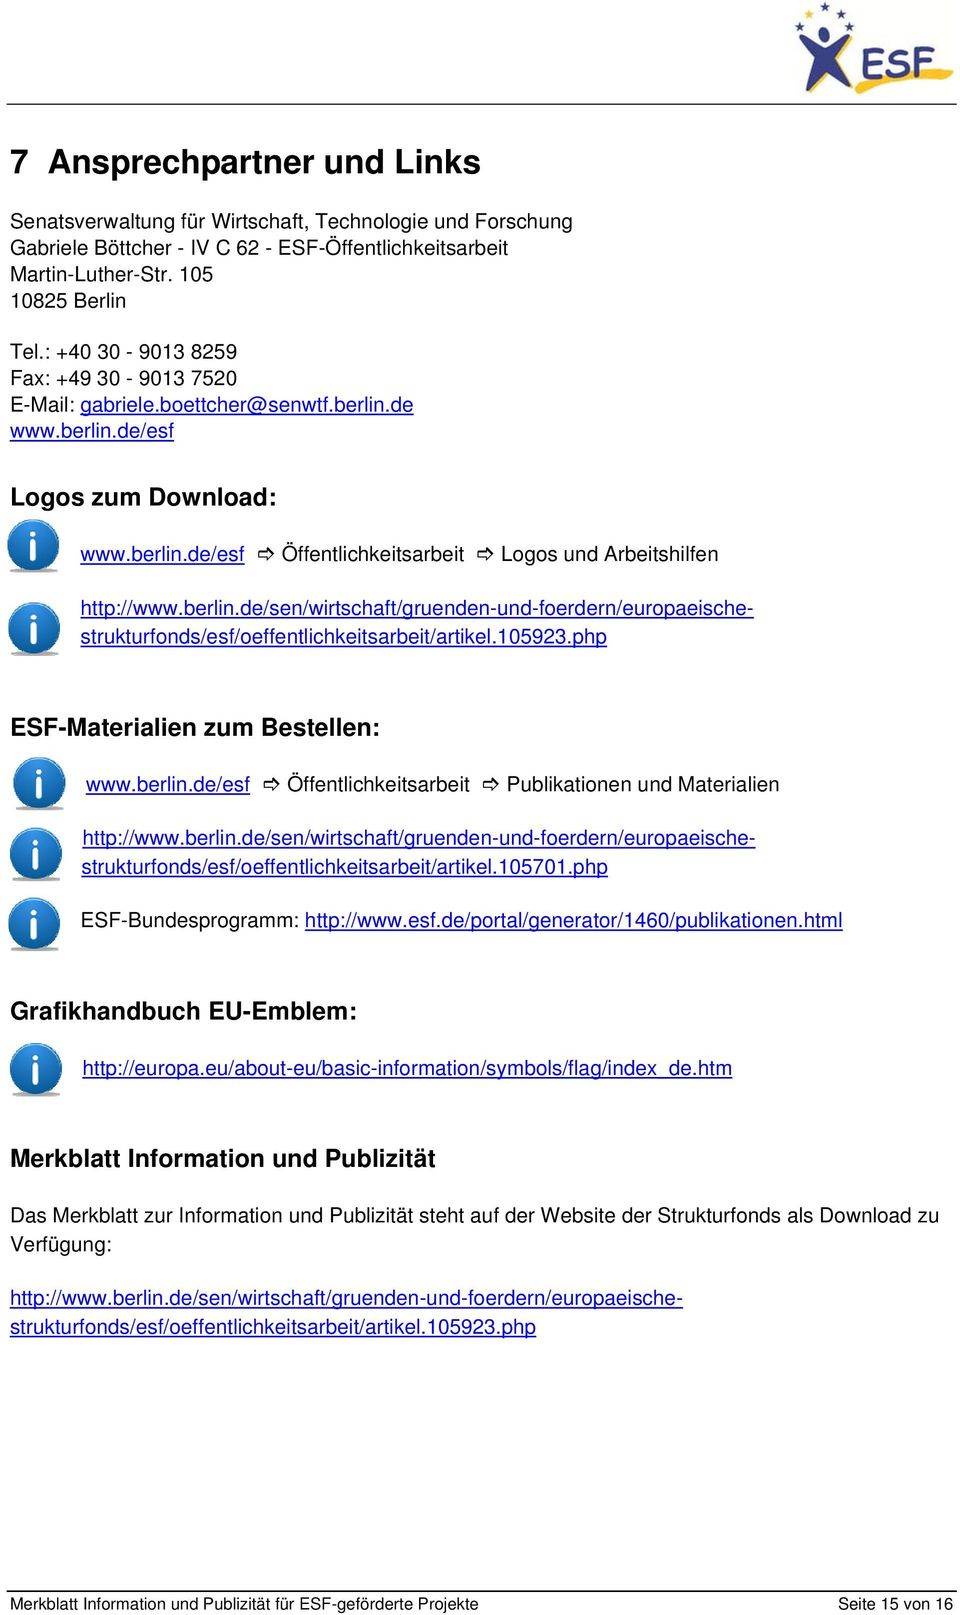 berlin.de/esf Öffentlichkeitsarbeit Publikationen und Materialien ESF-Bundesprogramm: http://www.esf.de/portal/generator/1460/publikationen.html Grafikhandbuch EU-Emblem: http://europa.